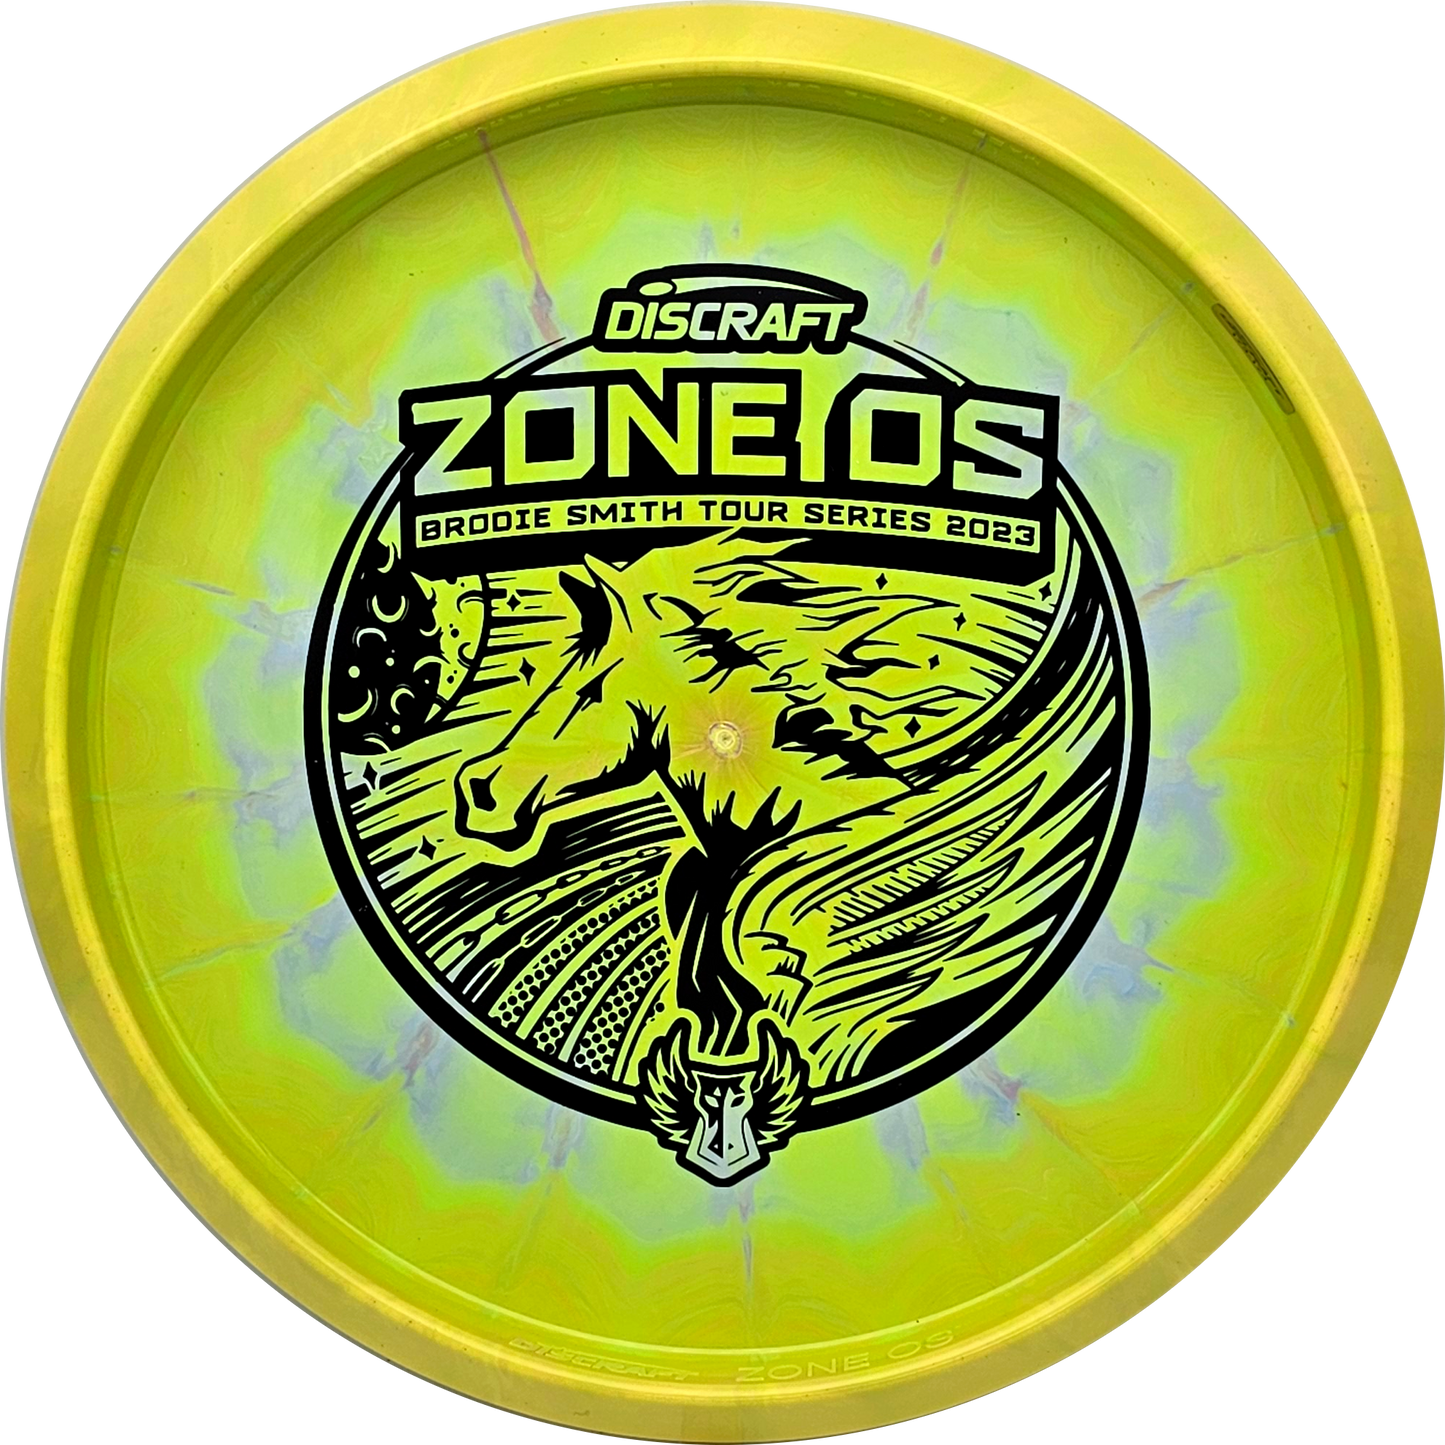 Discraft Bottom Stamp Zone OS - Brodie Smith Tour Series 2023